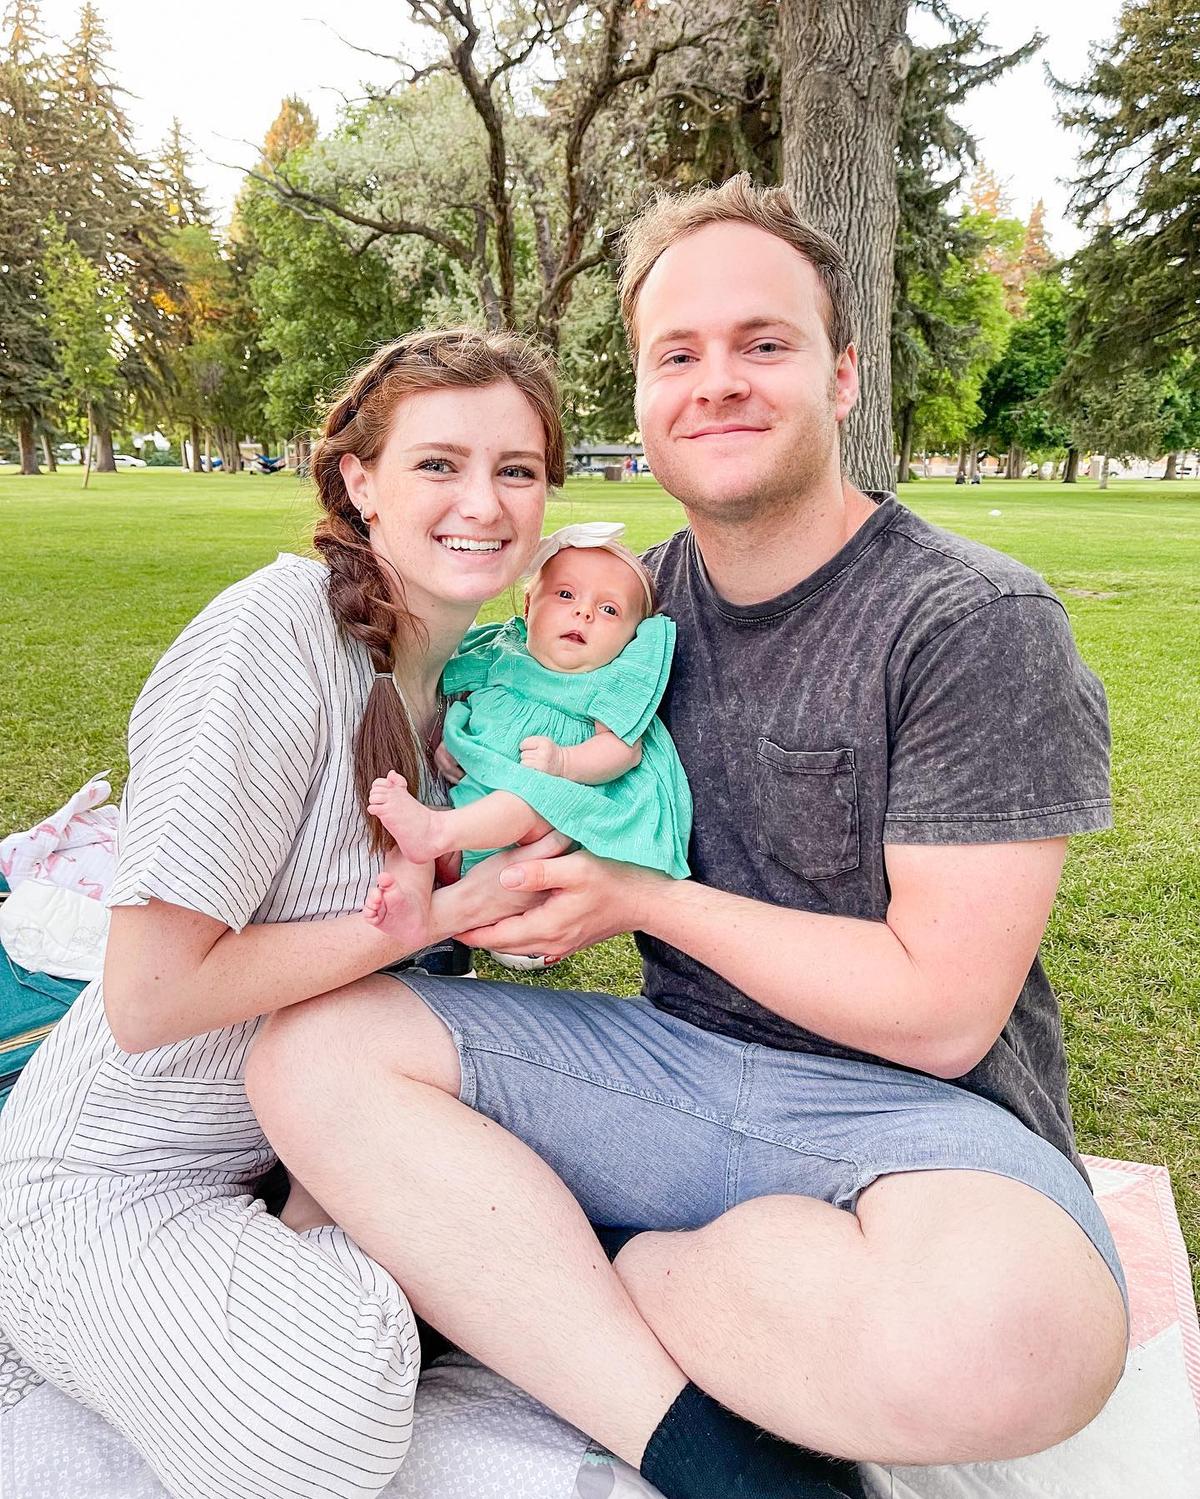 Hannah and Nicholas with their baby daughter. (Courtesy of <a href="https://www.instagram.com/hannahnichole29/">Hannah Nichole</a>)